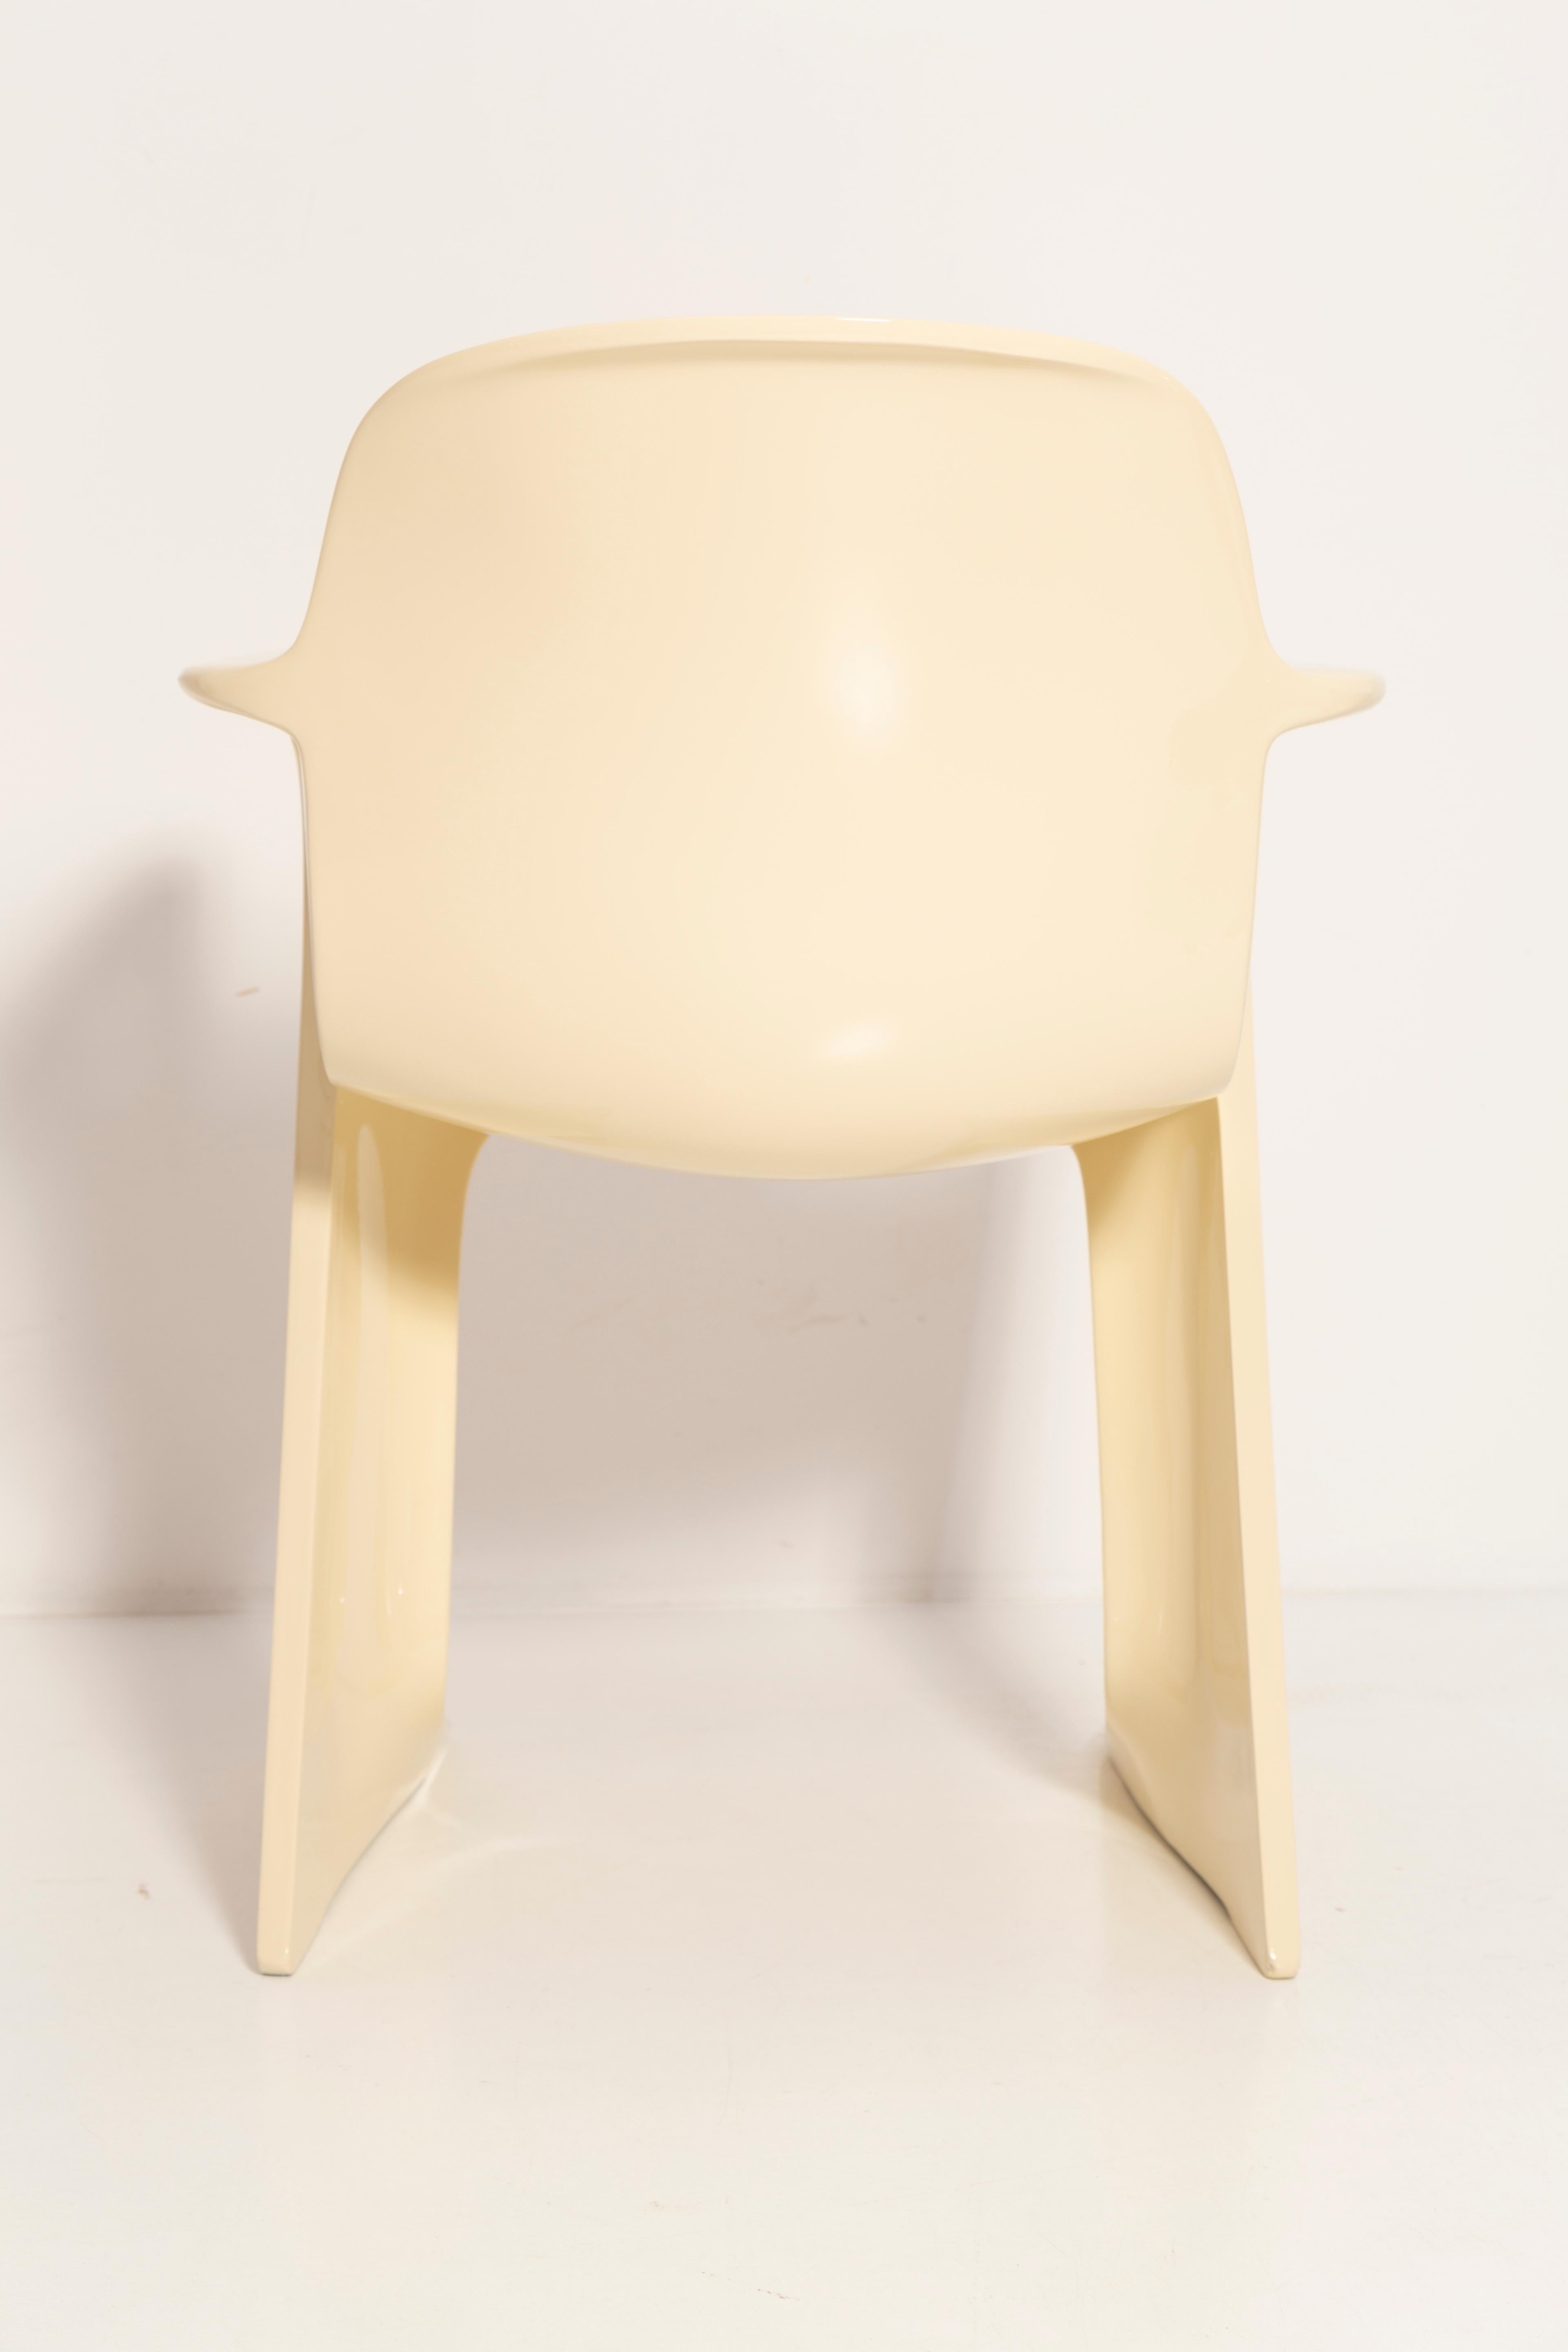 Pair of Mid-Century Light Beige Kangaroo Chairs, Ernst Moeckl, Germany, 1968 For Sale 6